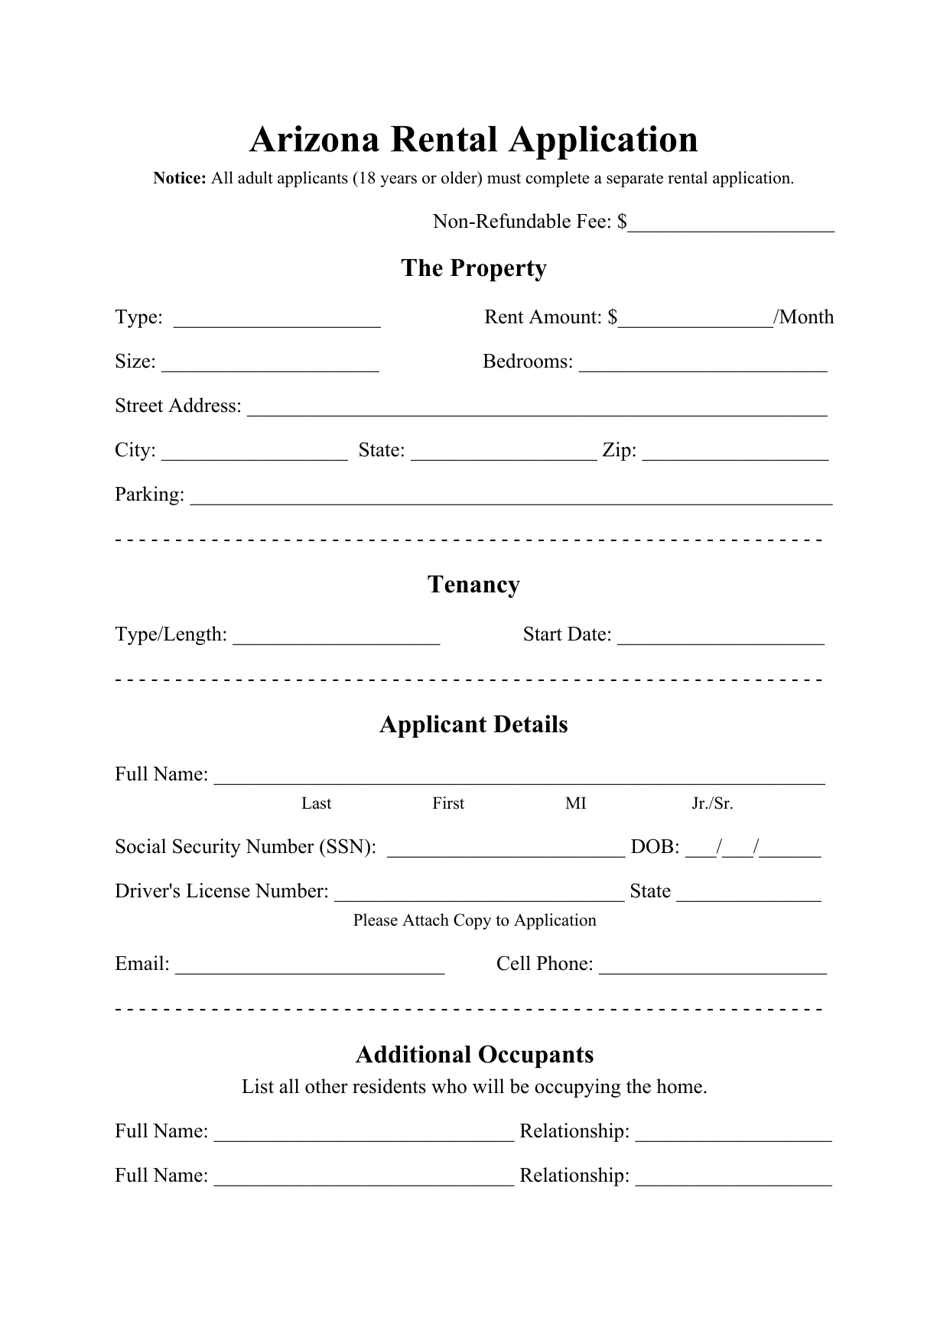 Rental Application Form - Arizona, Page 1